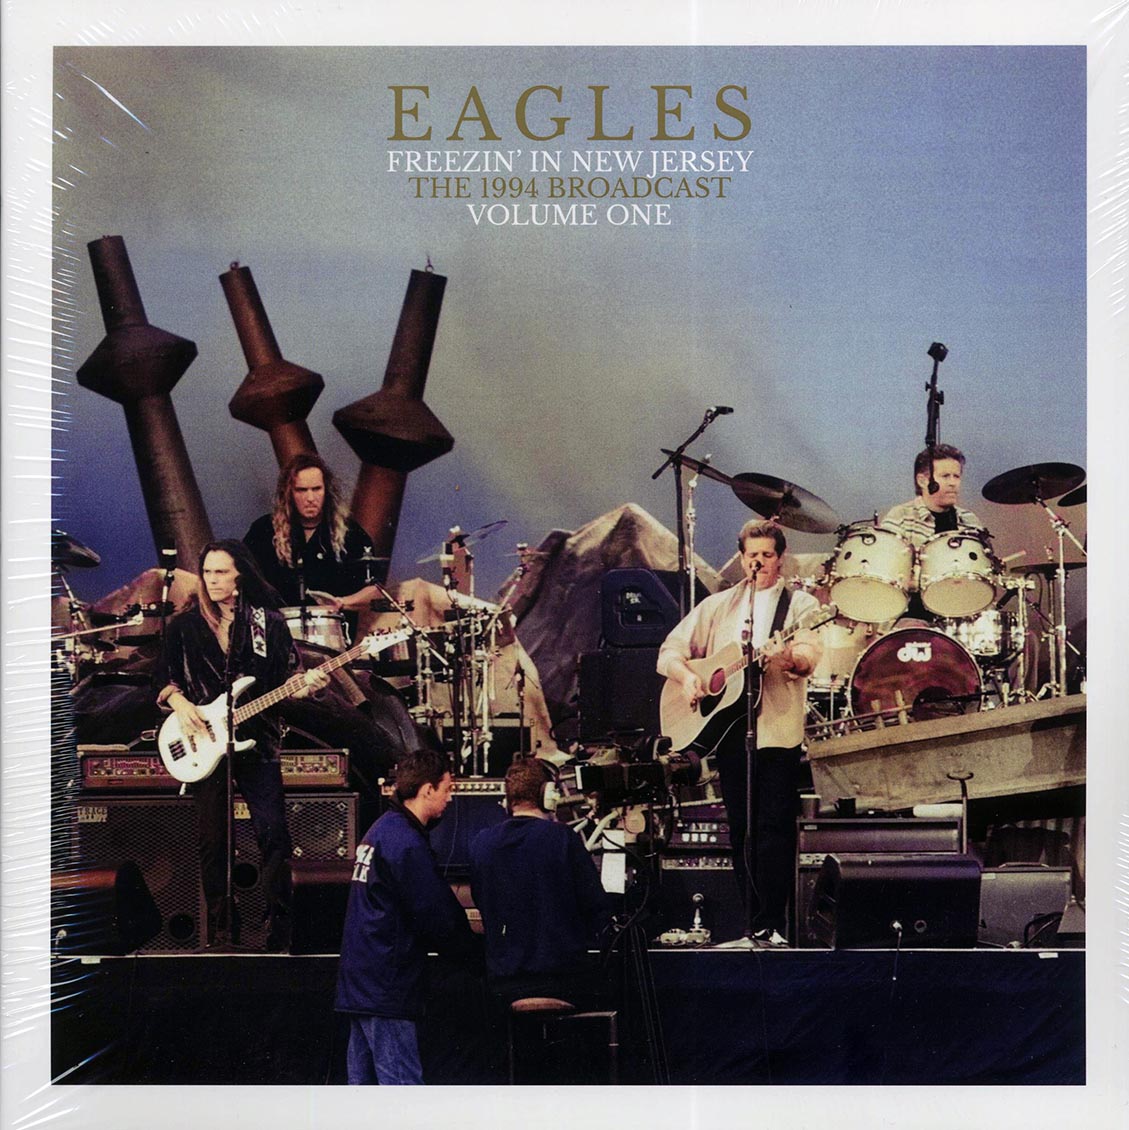 Eagles - Freezin' In New Jersey Volume 1 (2xLP) - Vinyl LP